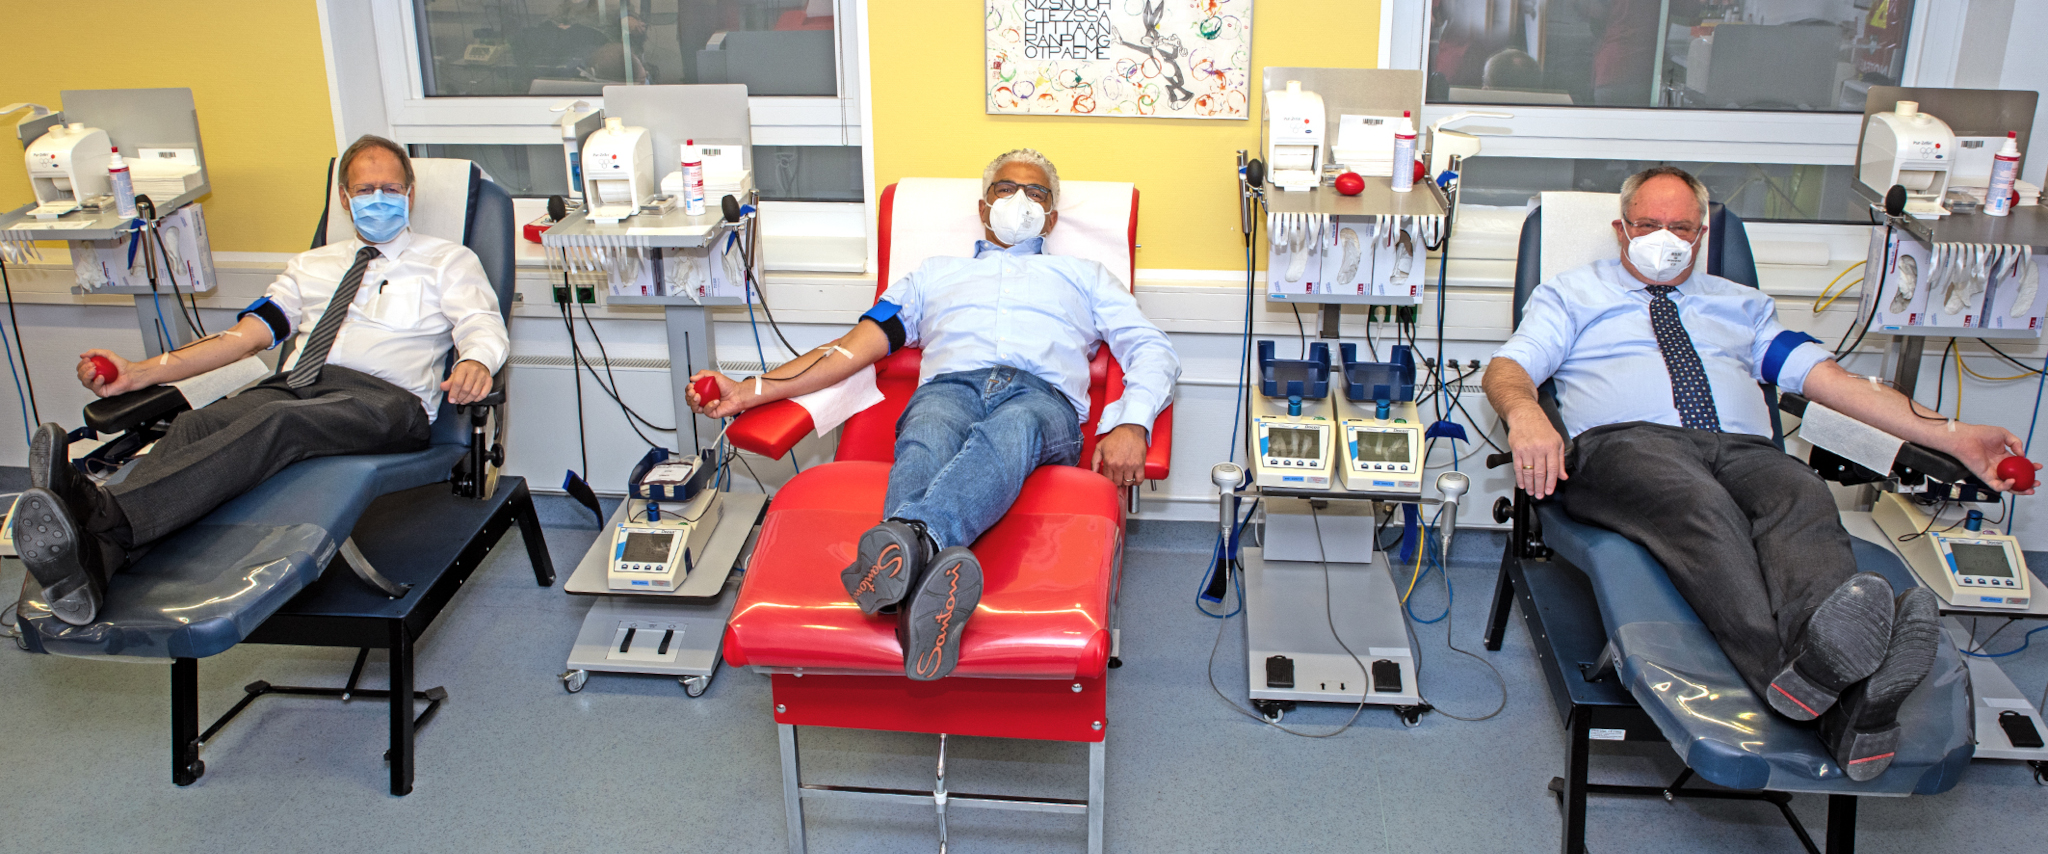 Ehemaliger Bonner Oberbürgermeister Sridharan spendet Blut am Universitätsklinikum Bonn